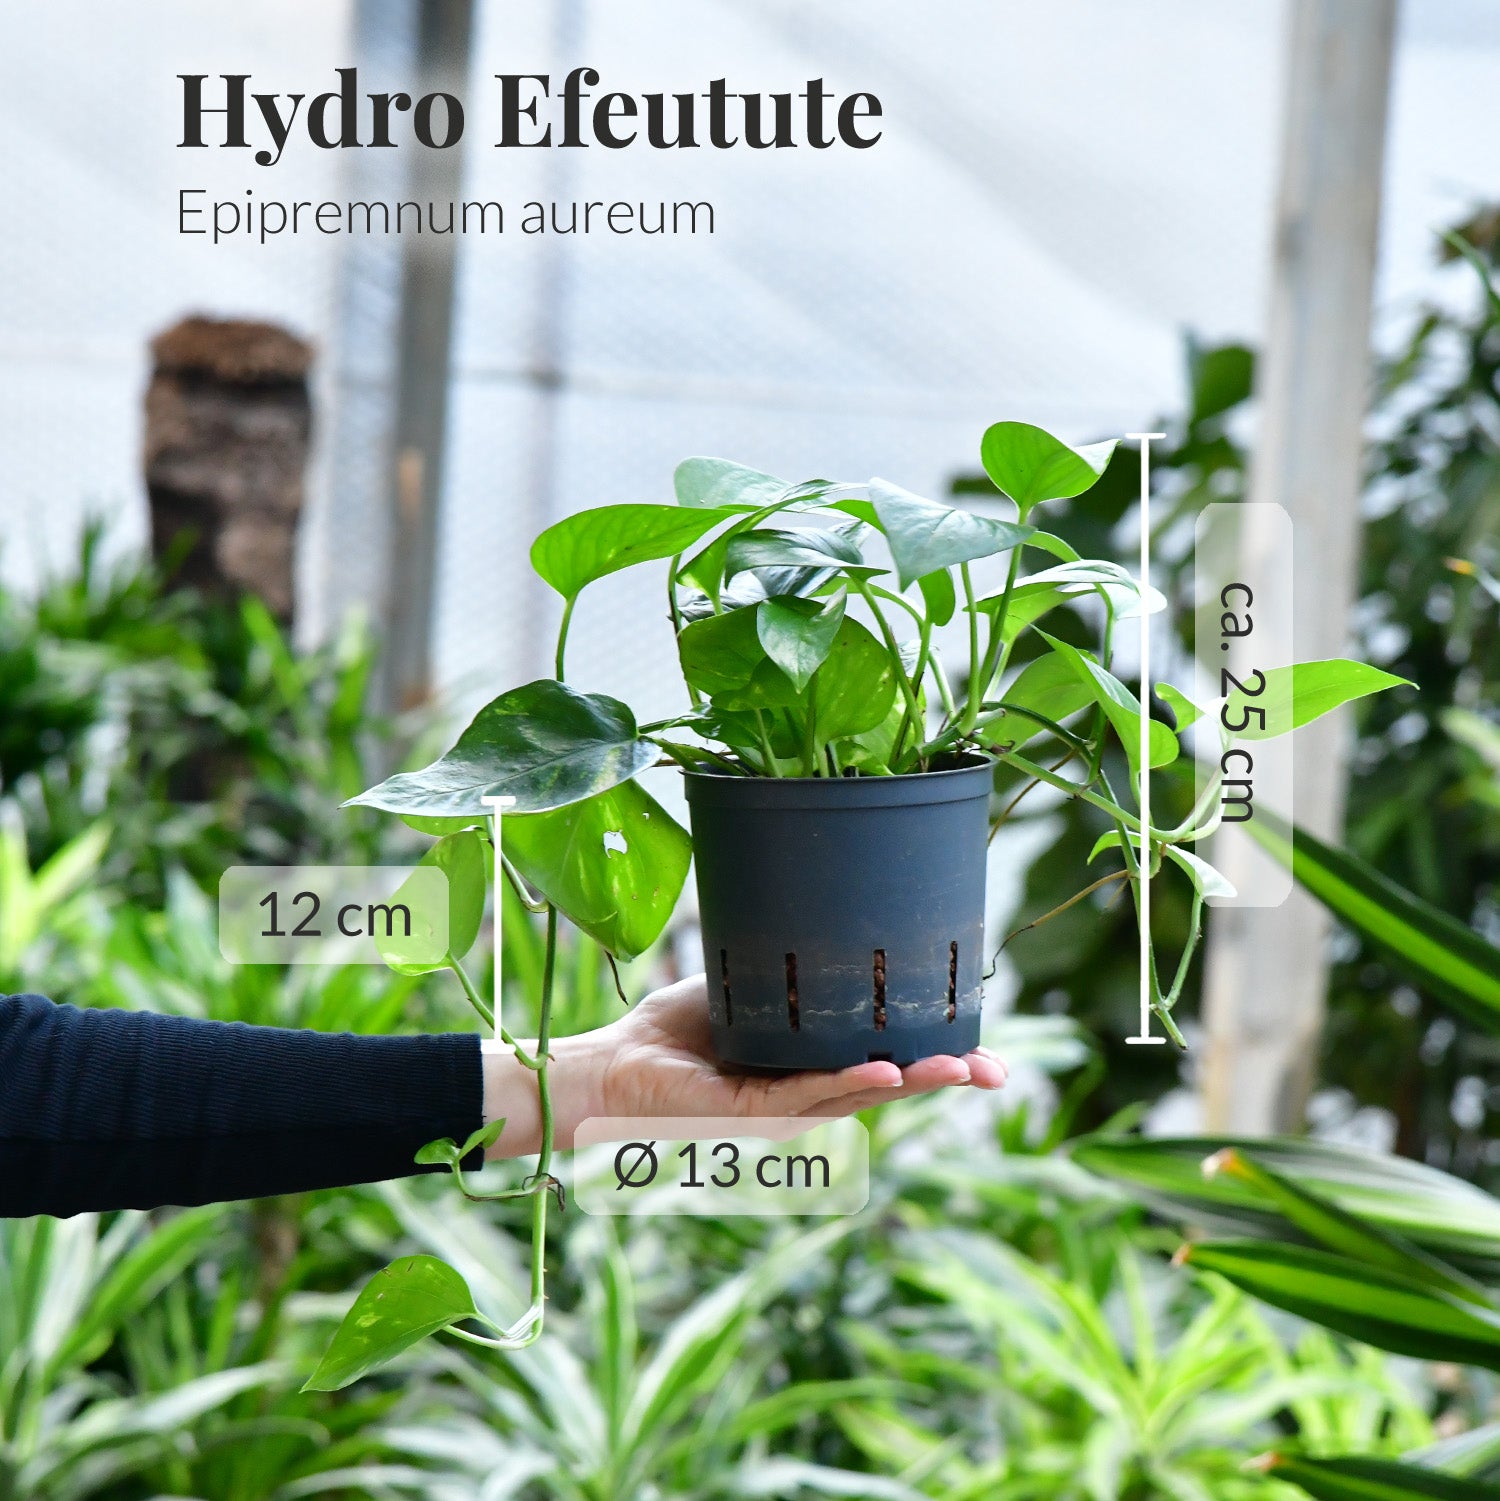 Eifrige Efeutute, Hydropflanze 20-25cm